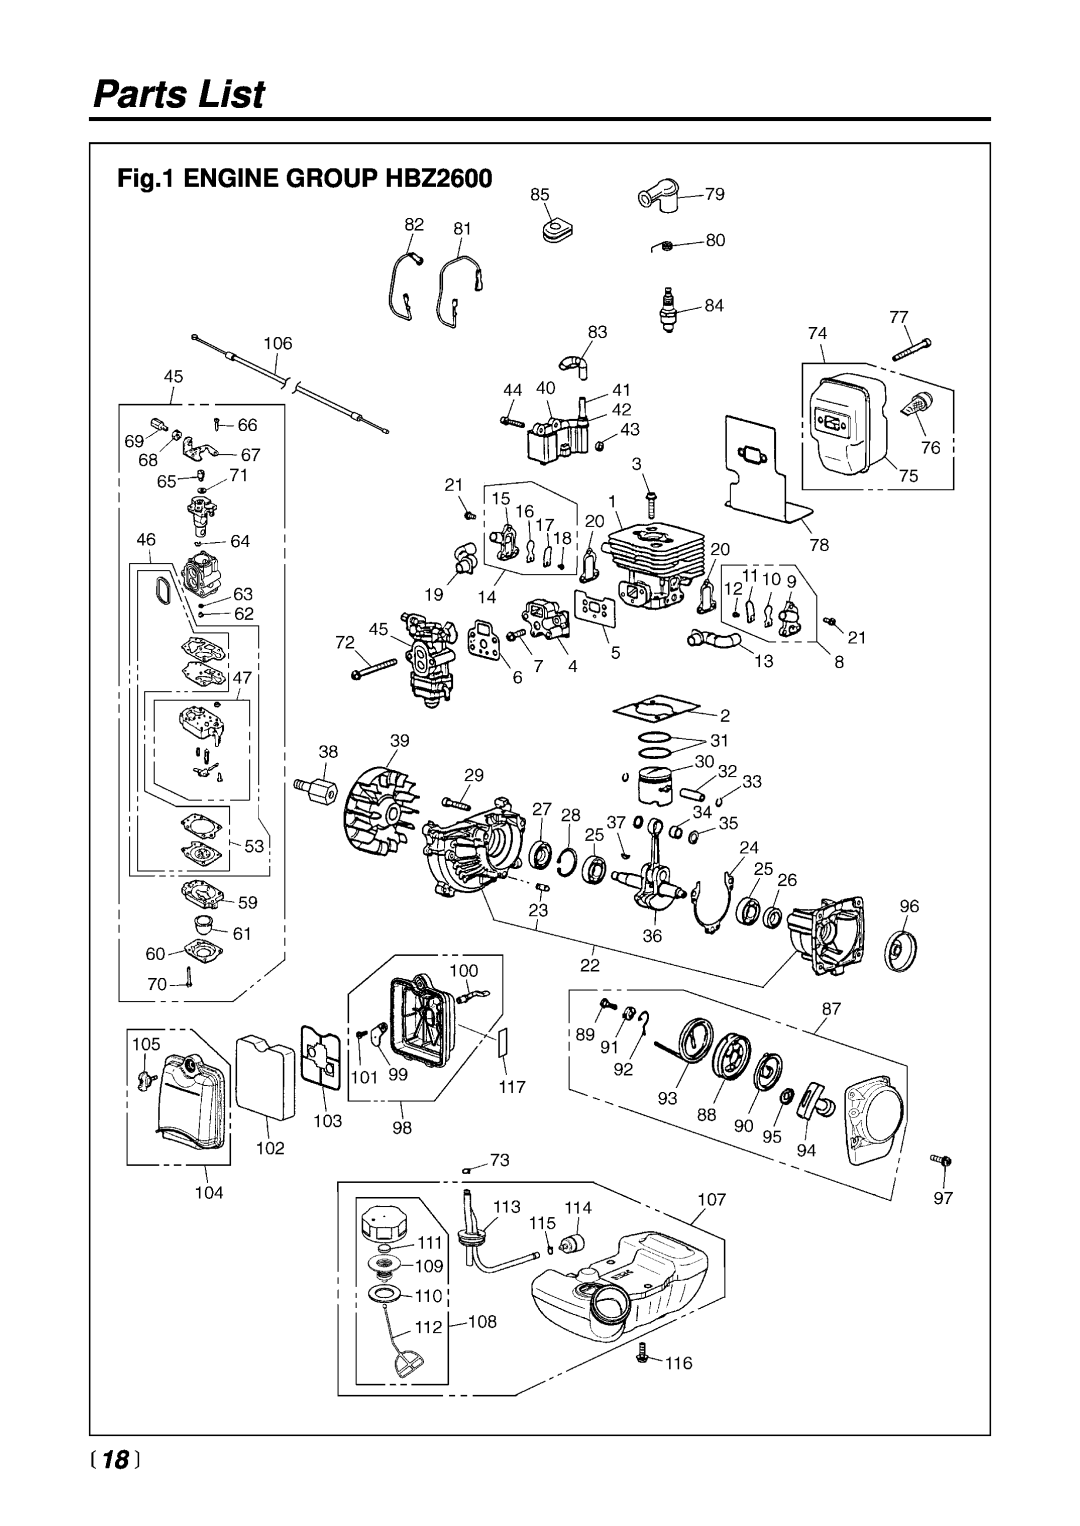 RedMax manual 18 , Parts List, ENGINE GROUP HBZ2600 